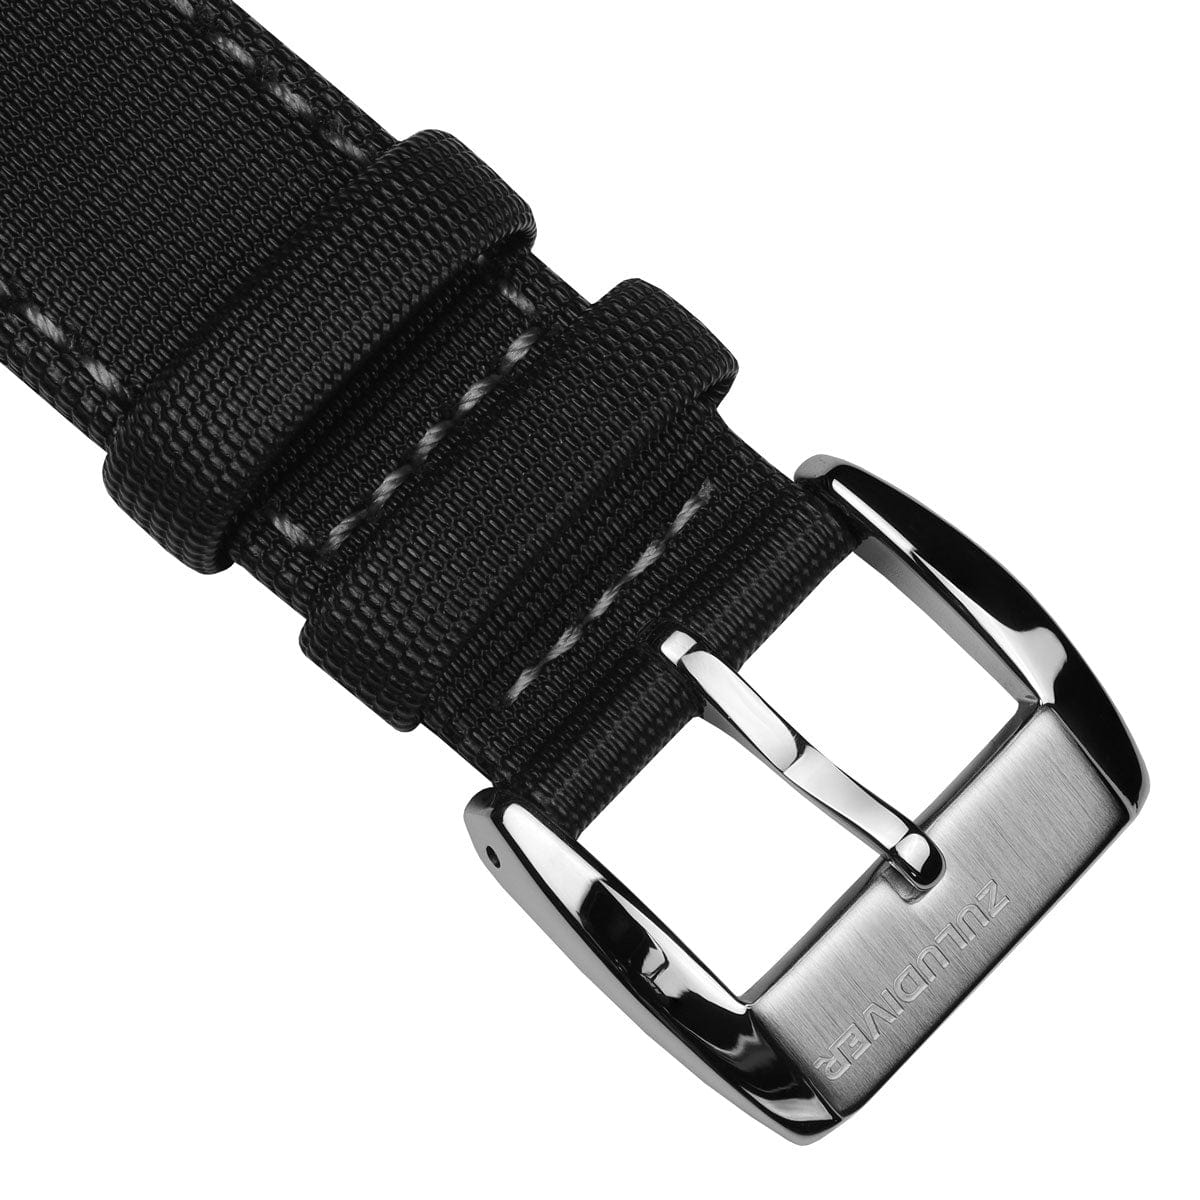 ZULUDIVER Maverick (MK II) Sailcloth Waterproof Watch Strap - Black / Grey